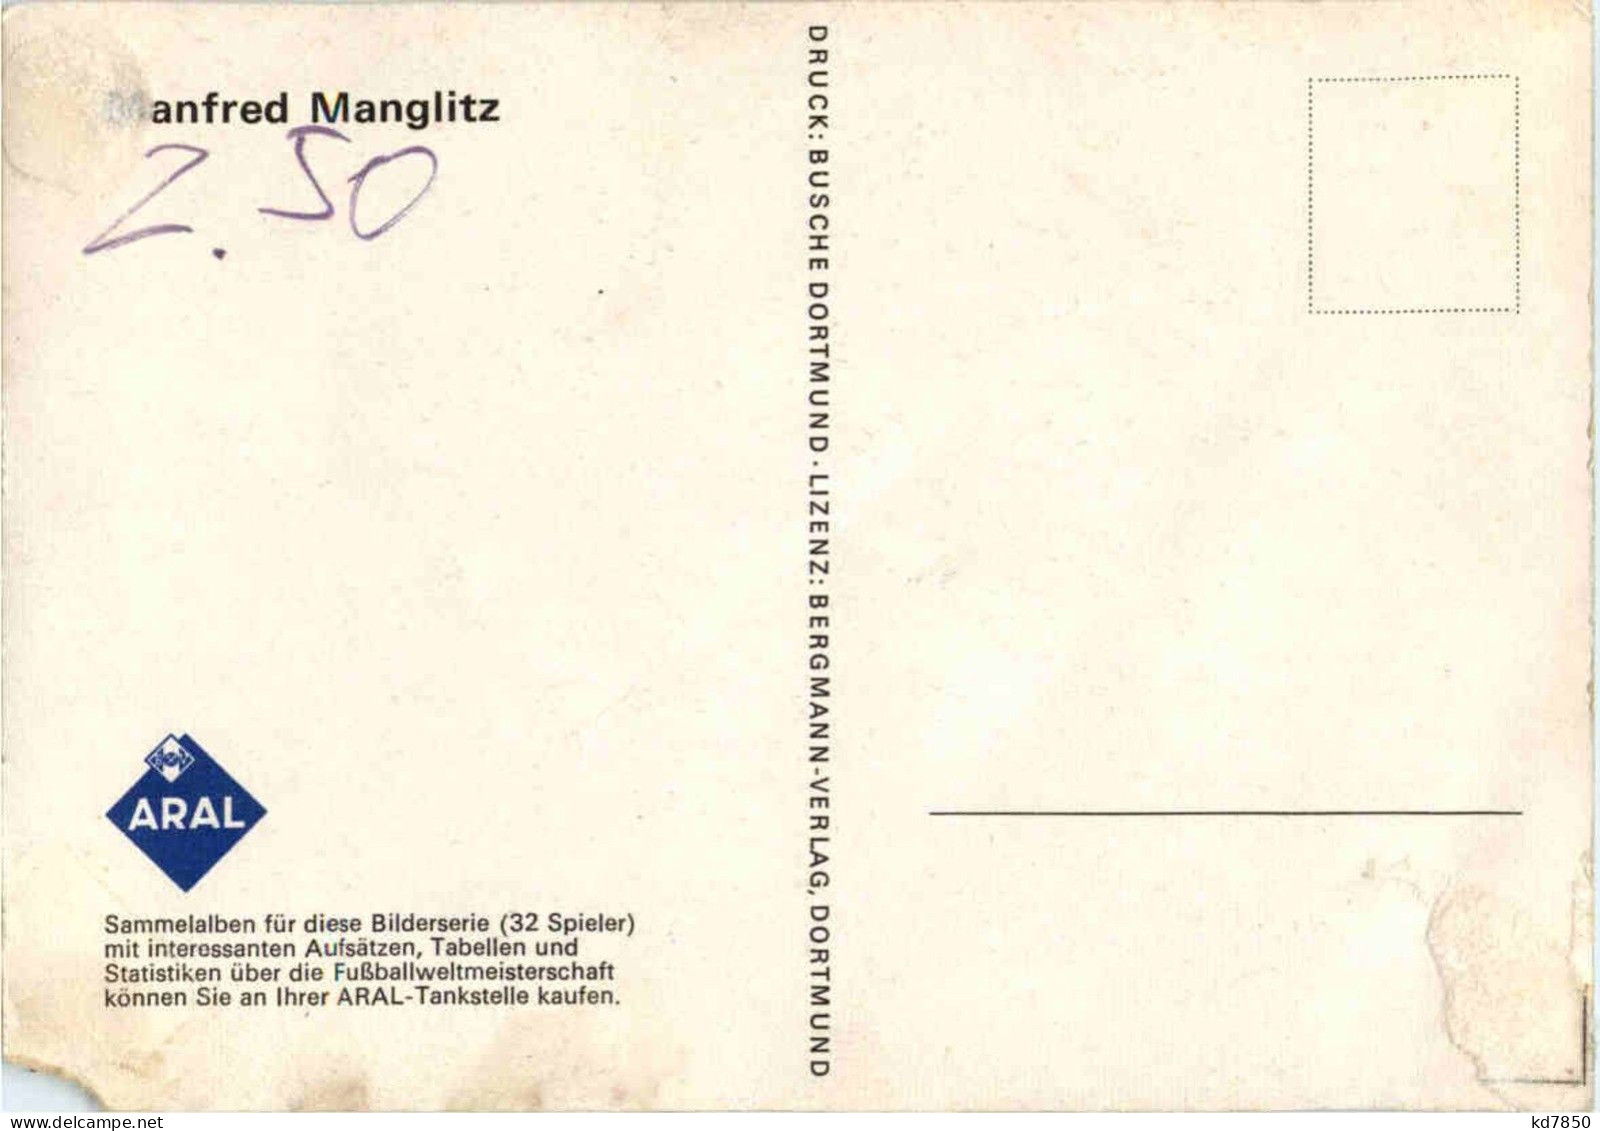 Manfred Manglitz - Football